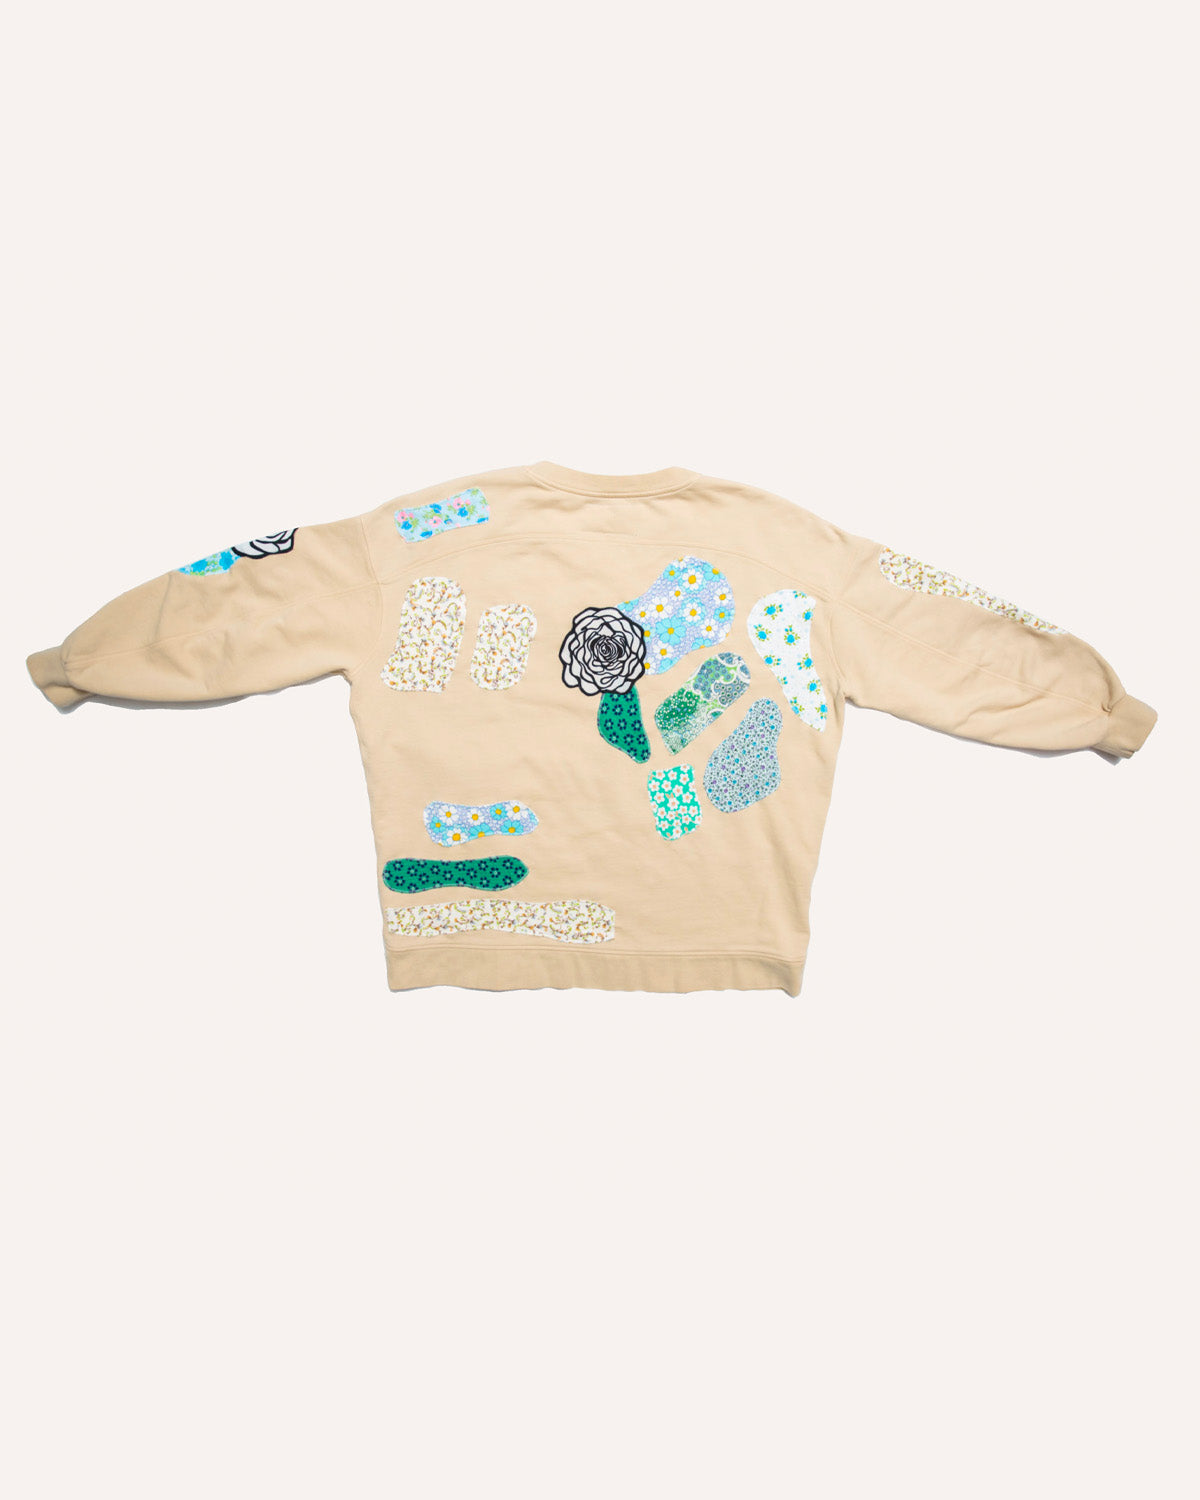 Floral Vintage Crewneck Sweater (XL)